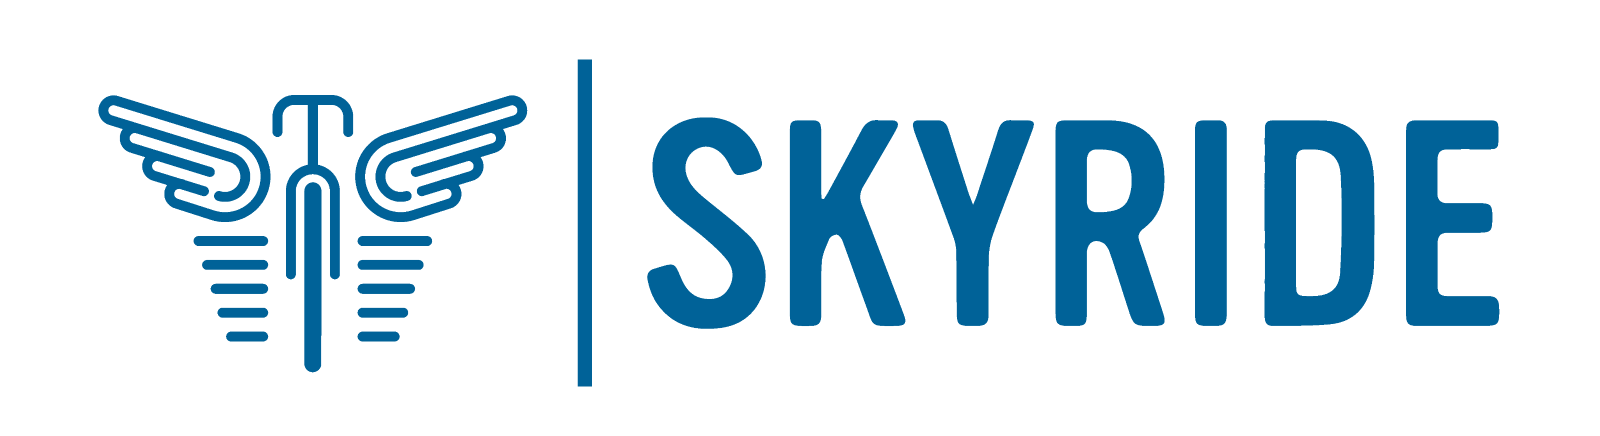 SkyRide logo - mark and text